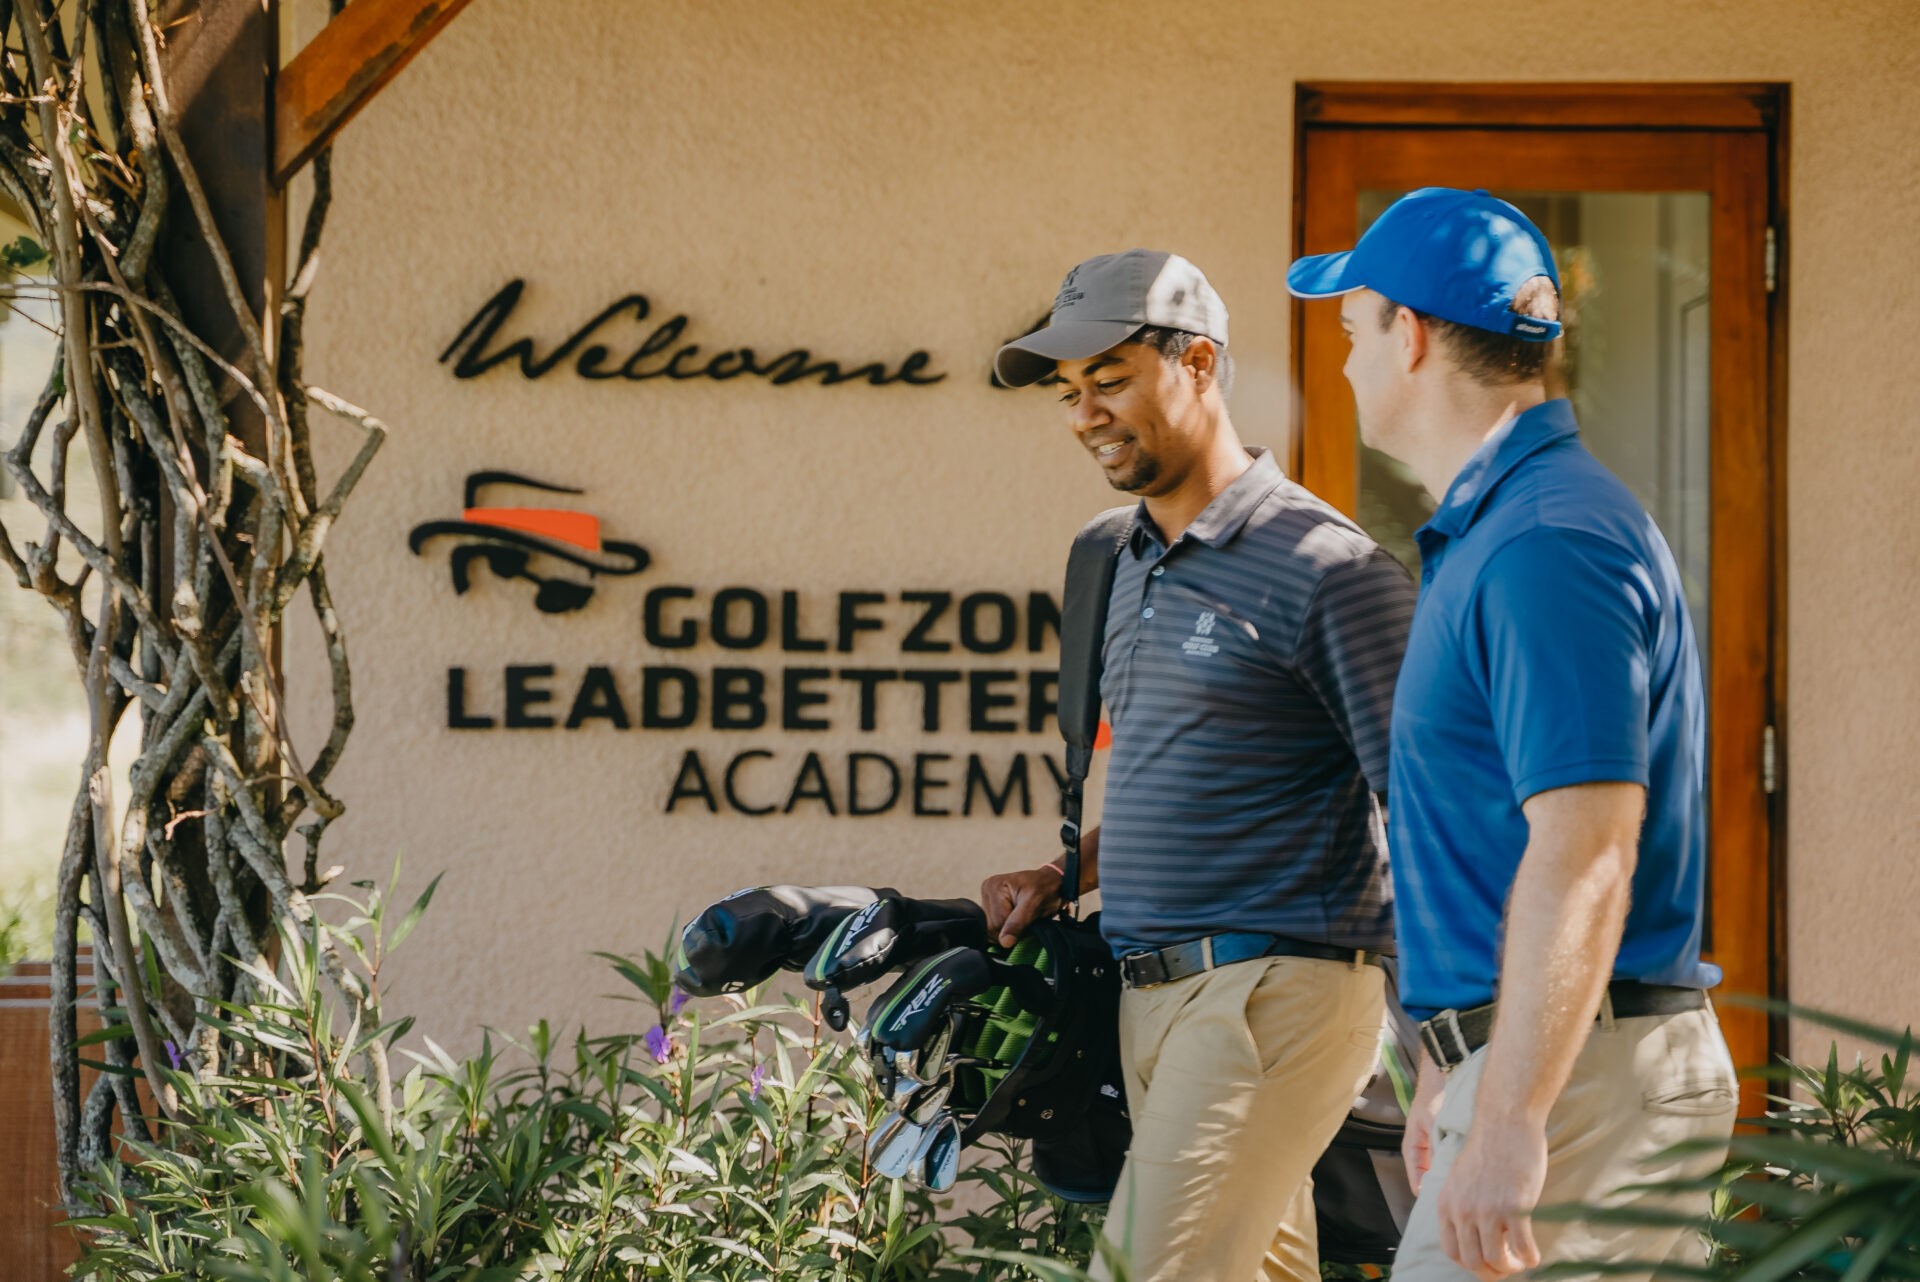 Golfzon Leadbetter Academy im Heritage Golf Club auf Mauritius eröffnet